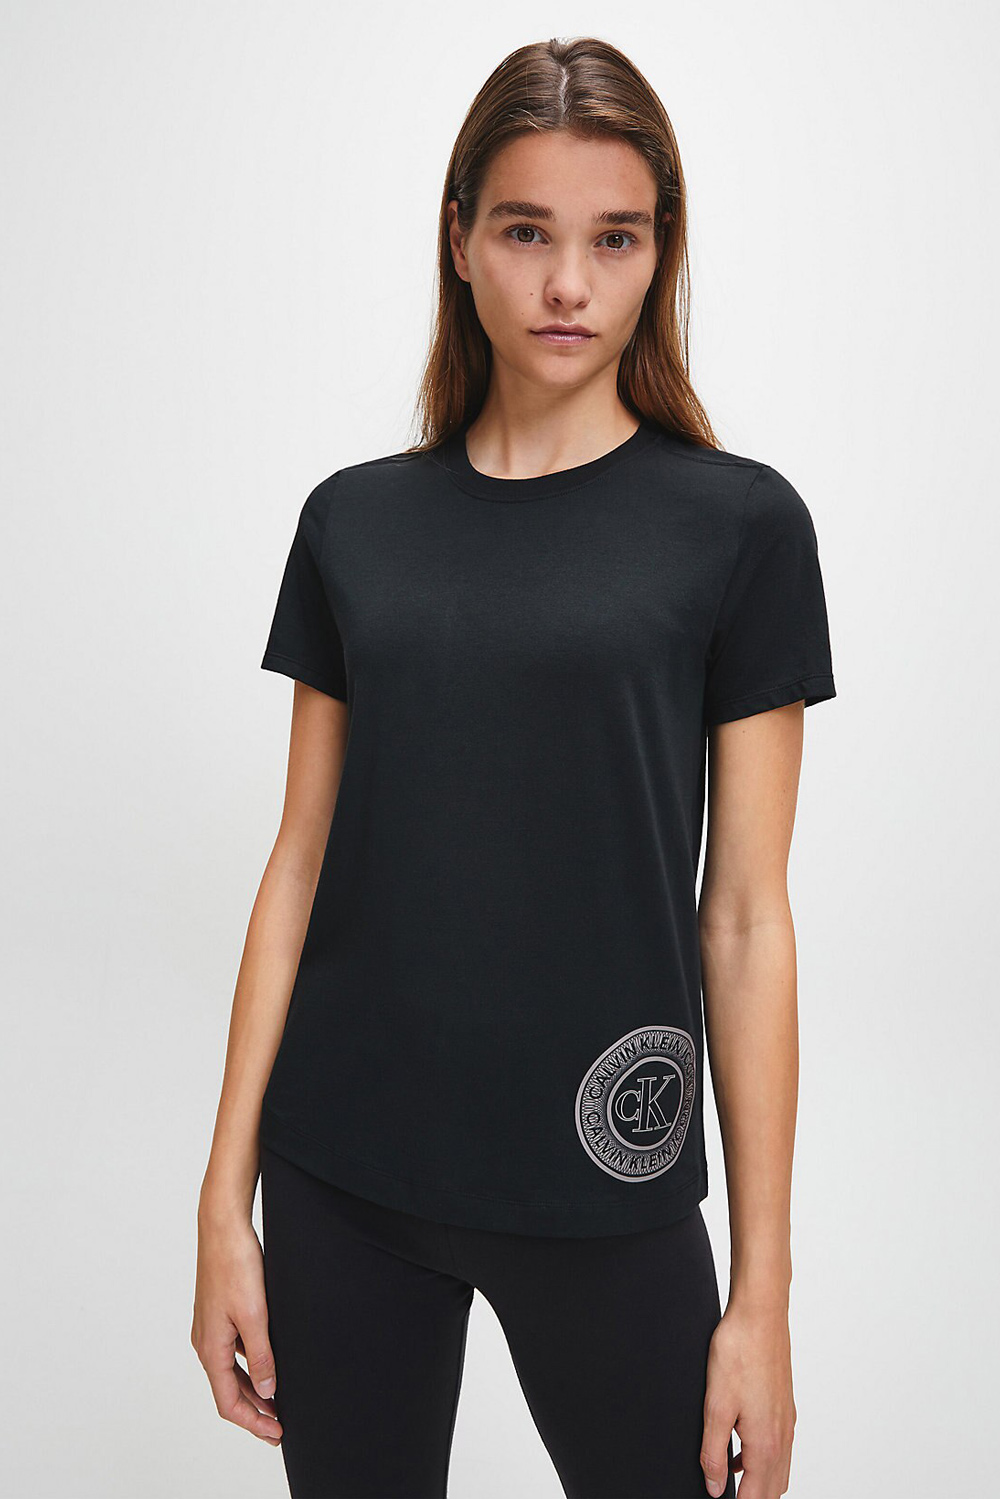 Calvin Klein černé tričko S/S Crew Neck